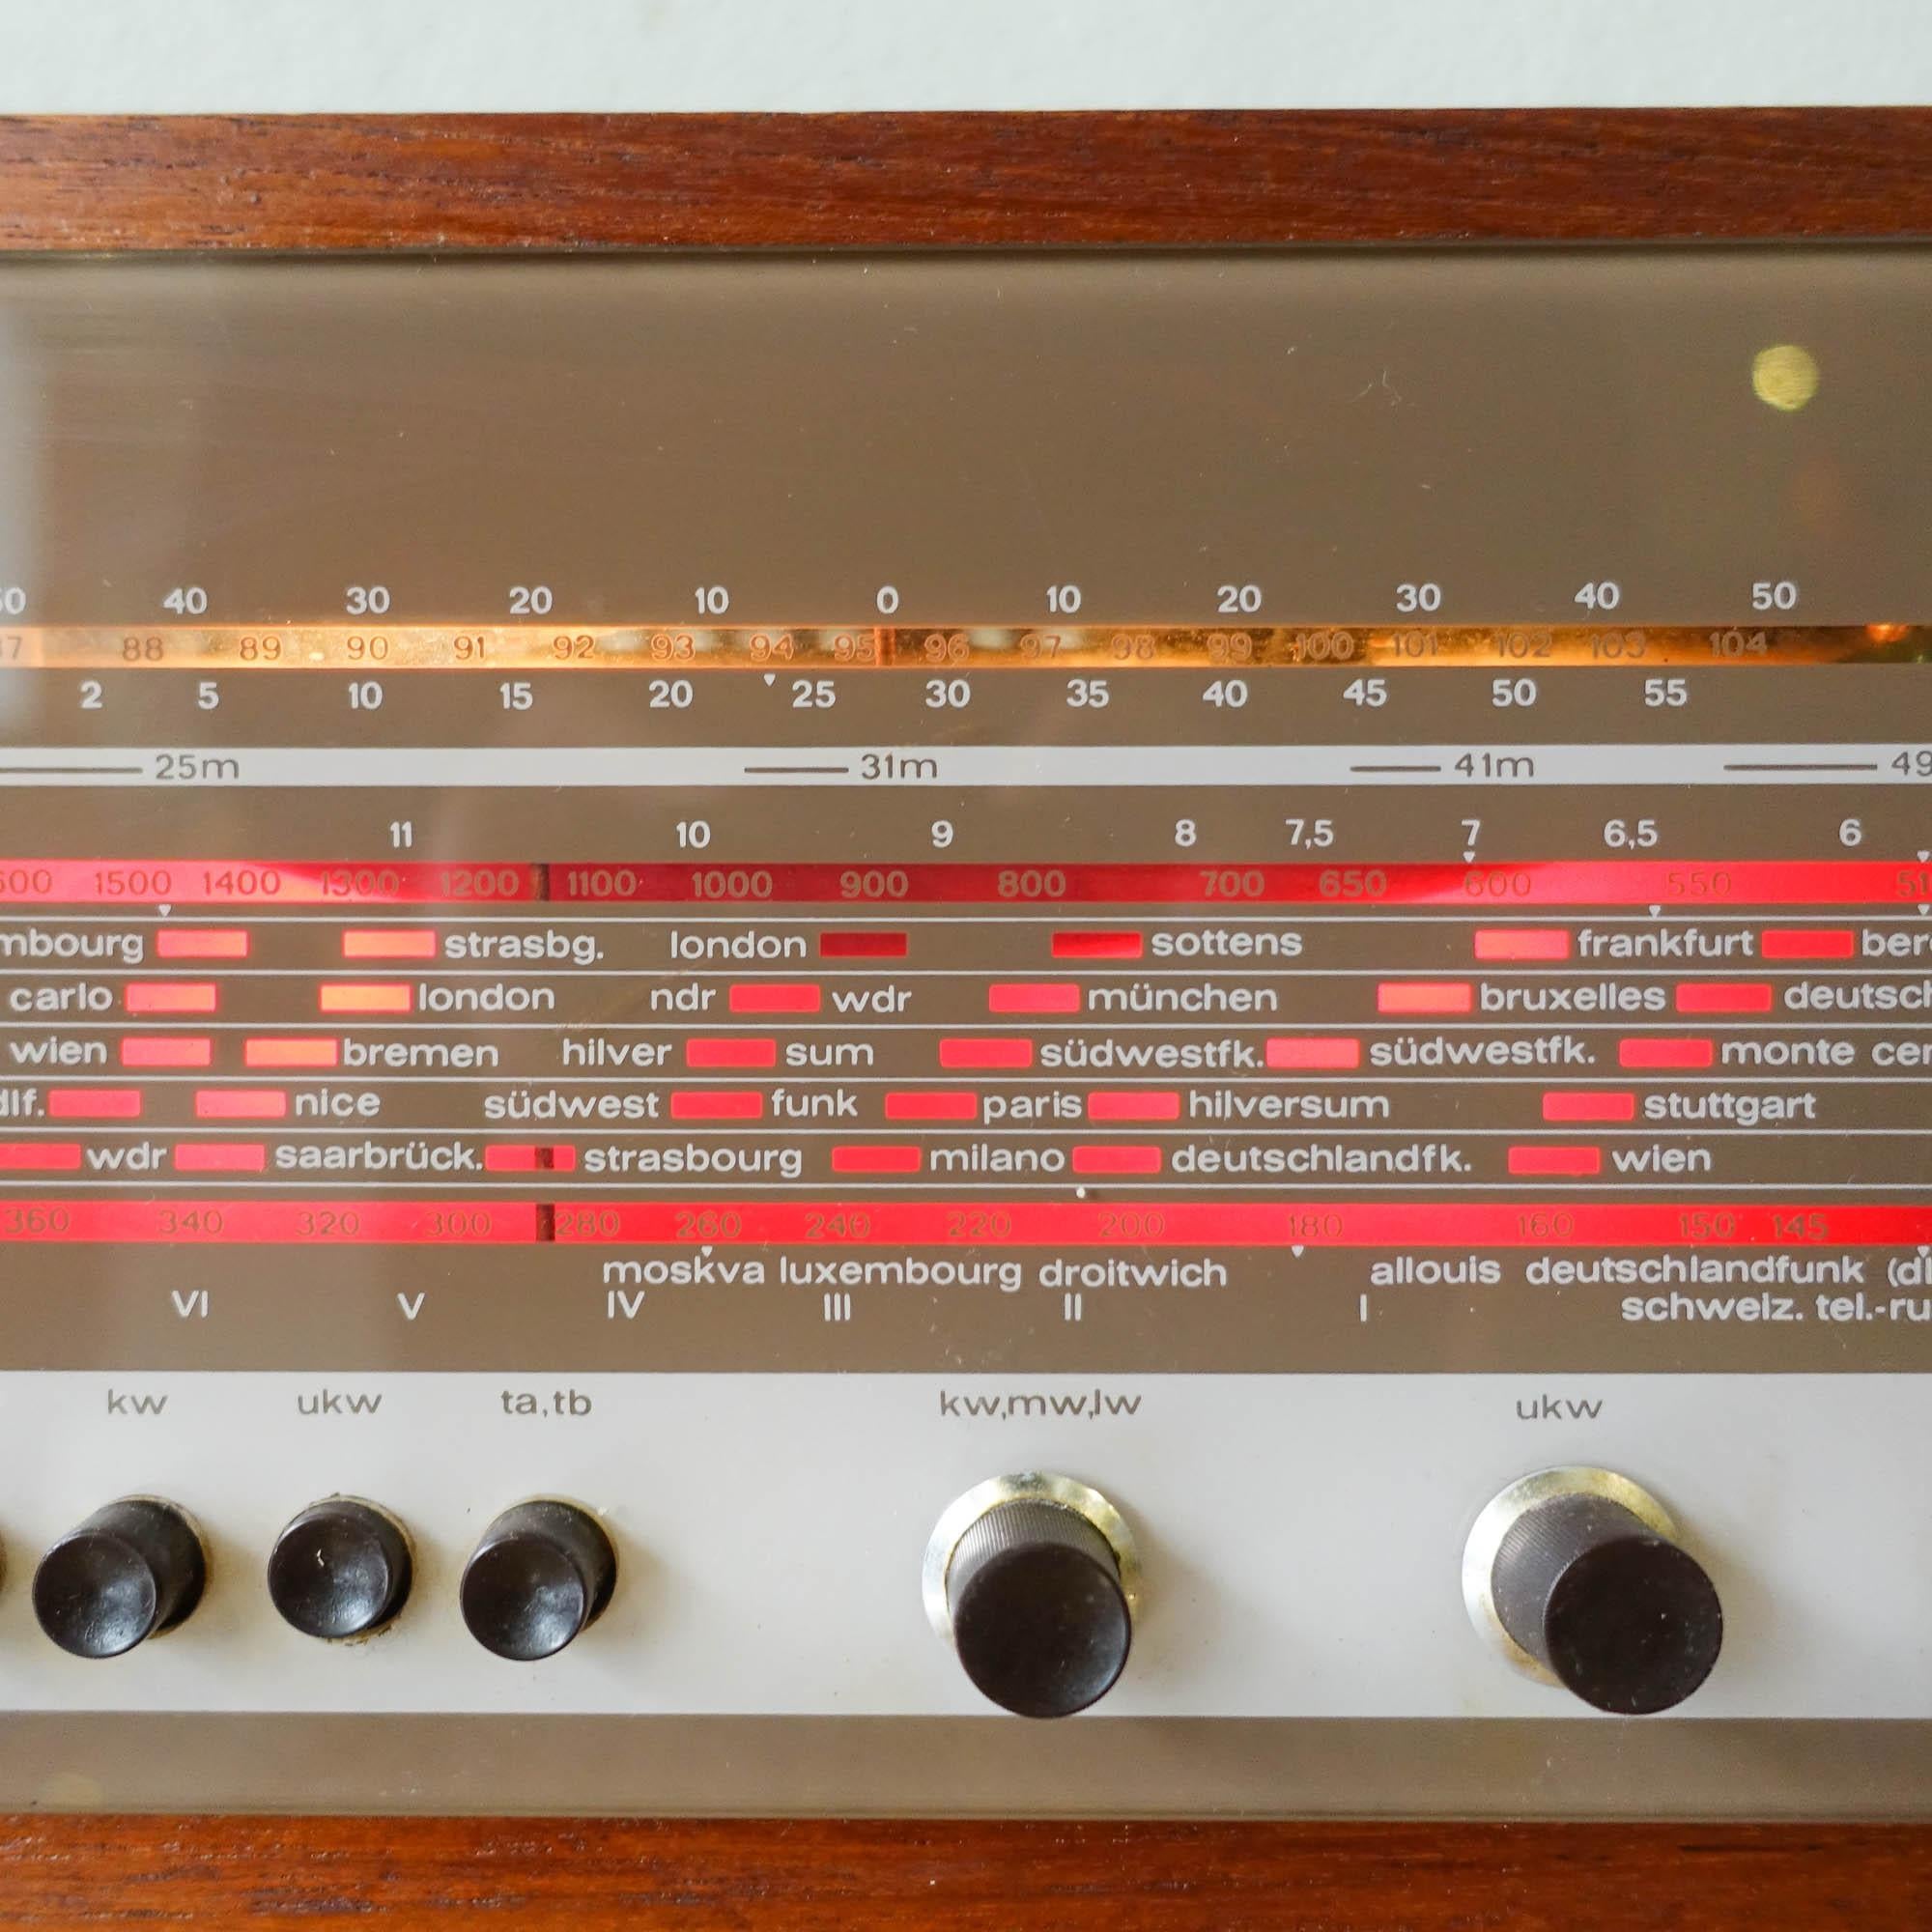 Mid-20th Century Teak Type 135 Radio from Wega, 1960s For Sale